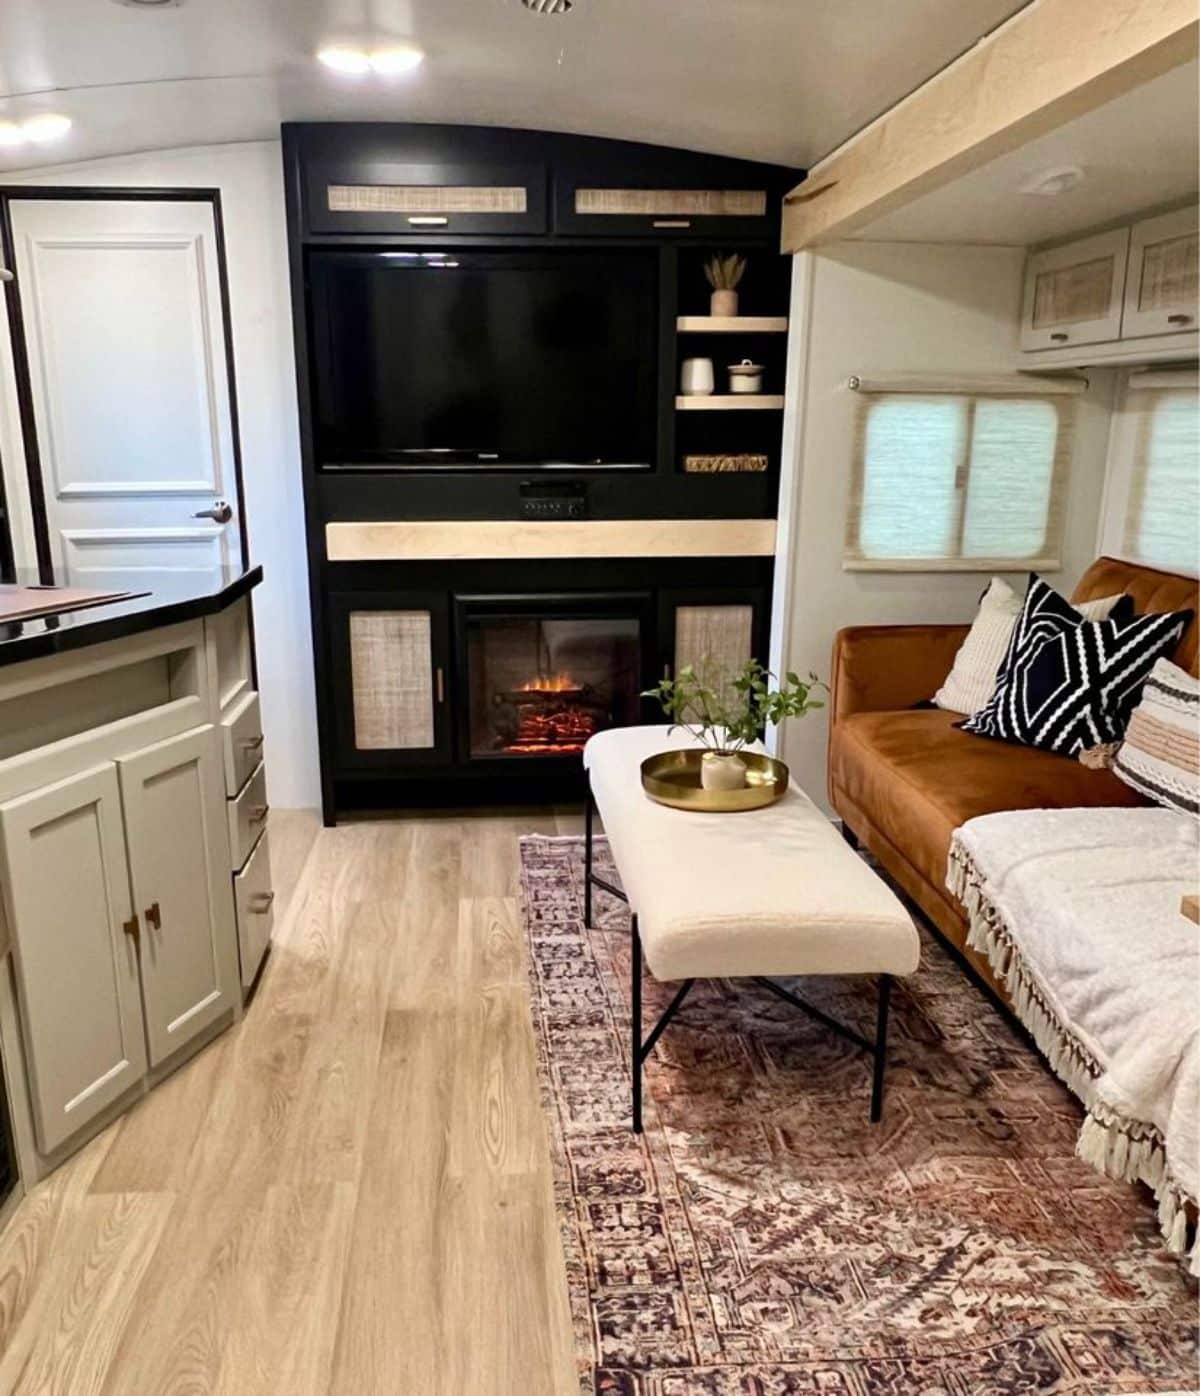 Stunning interiors of renovated travel trailer